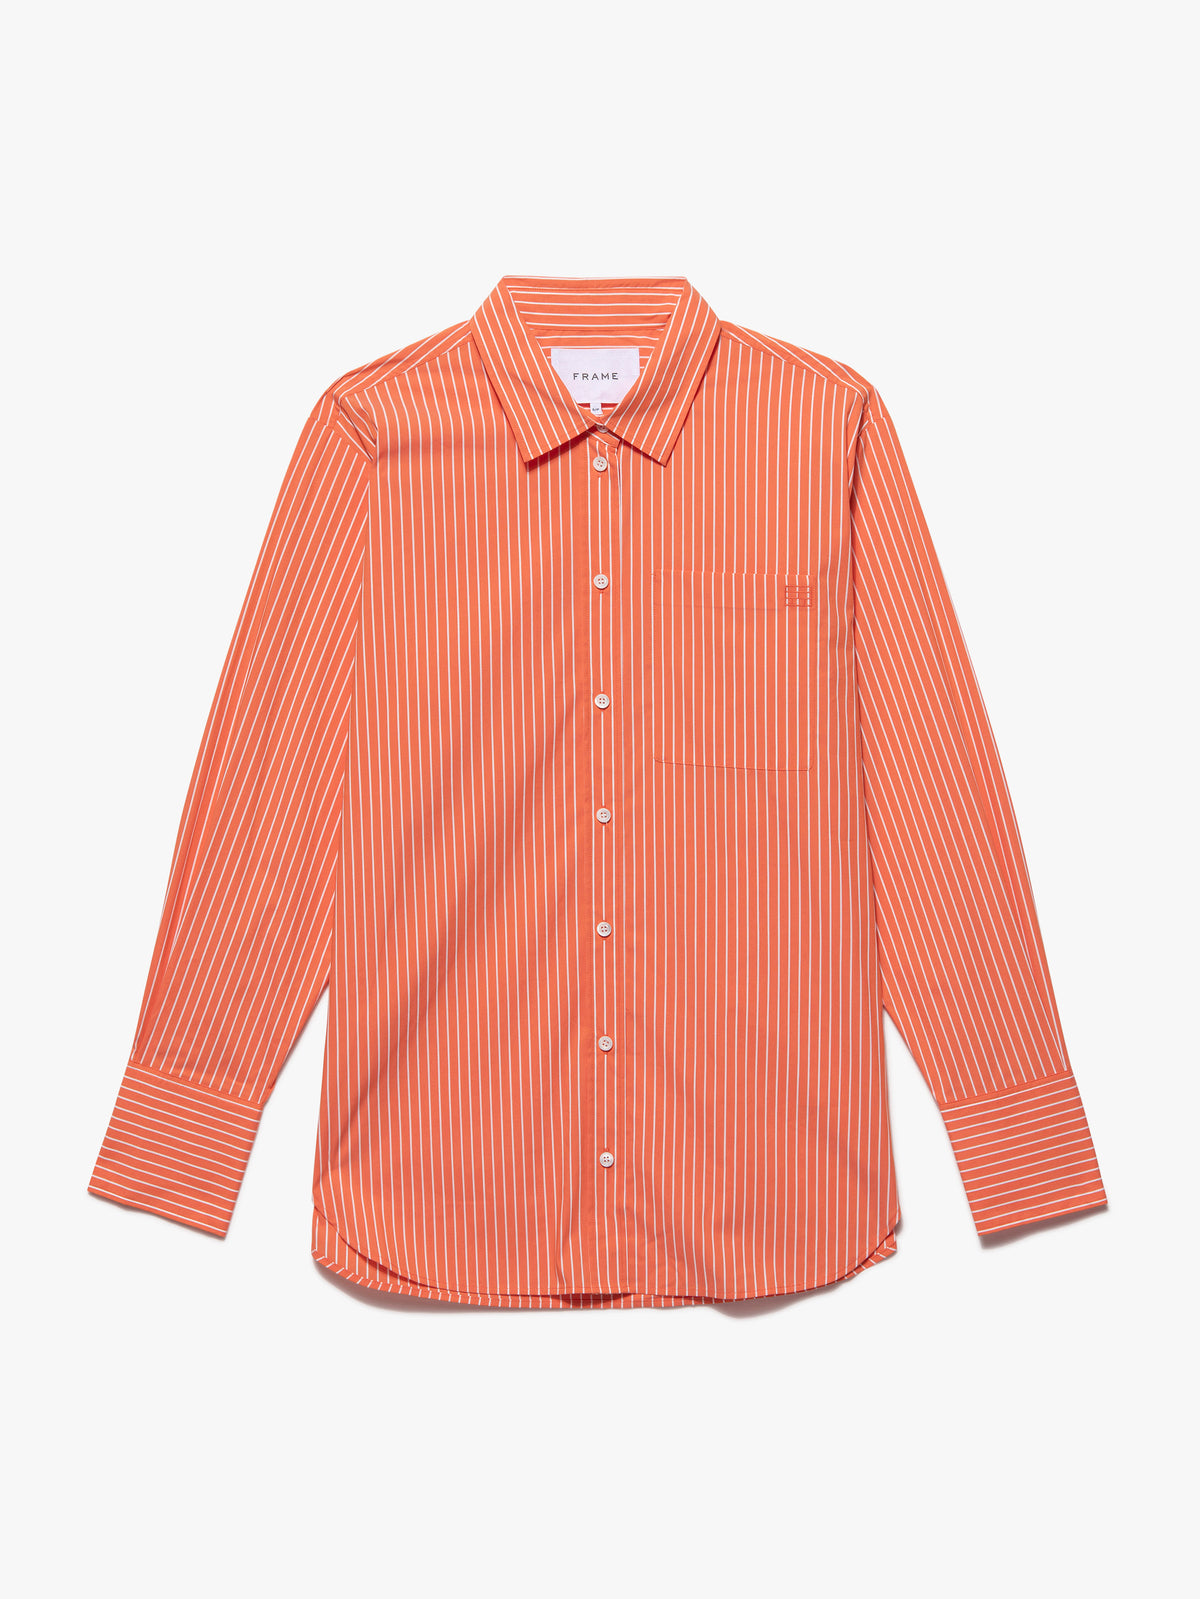 FRAME - The Oversized Shirt - Tangerine Multi - prodottihaccp